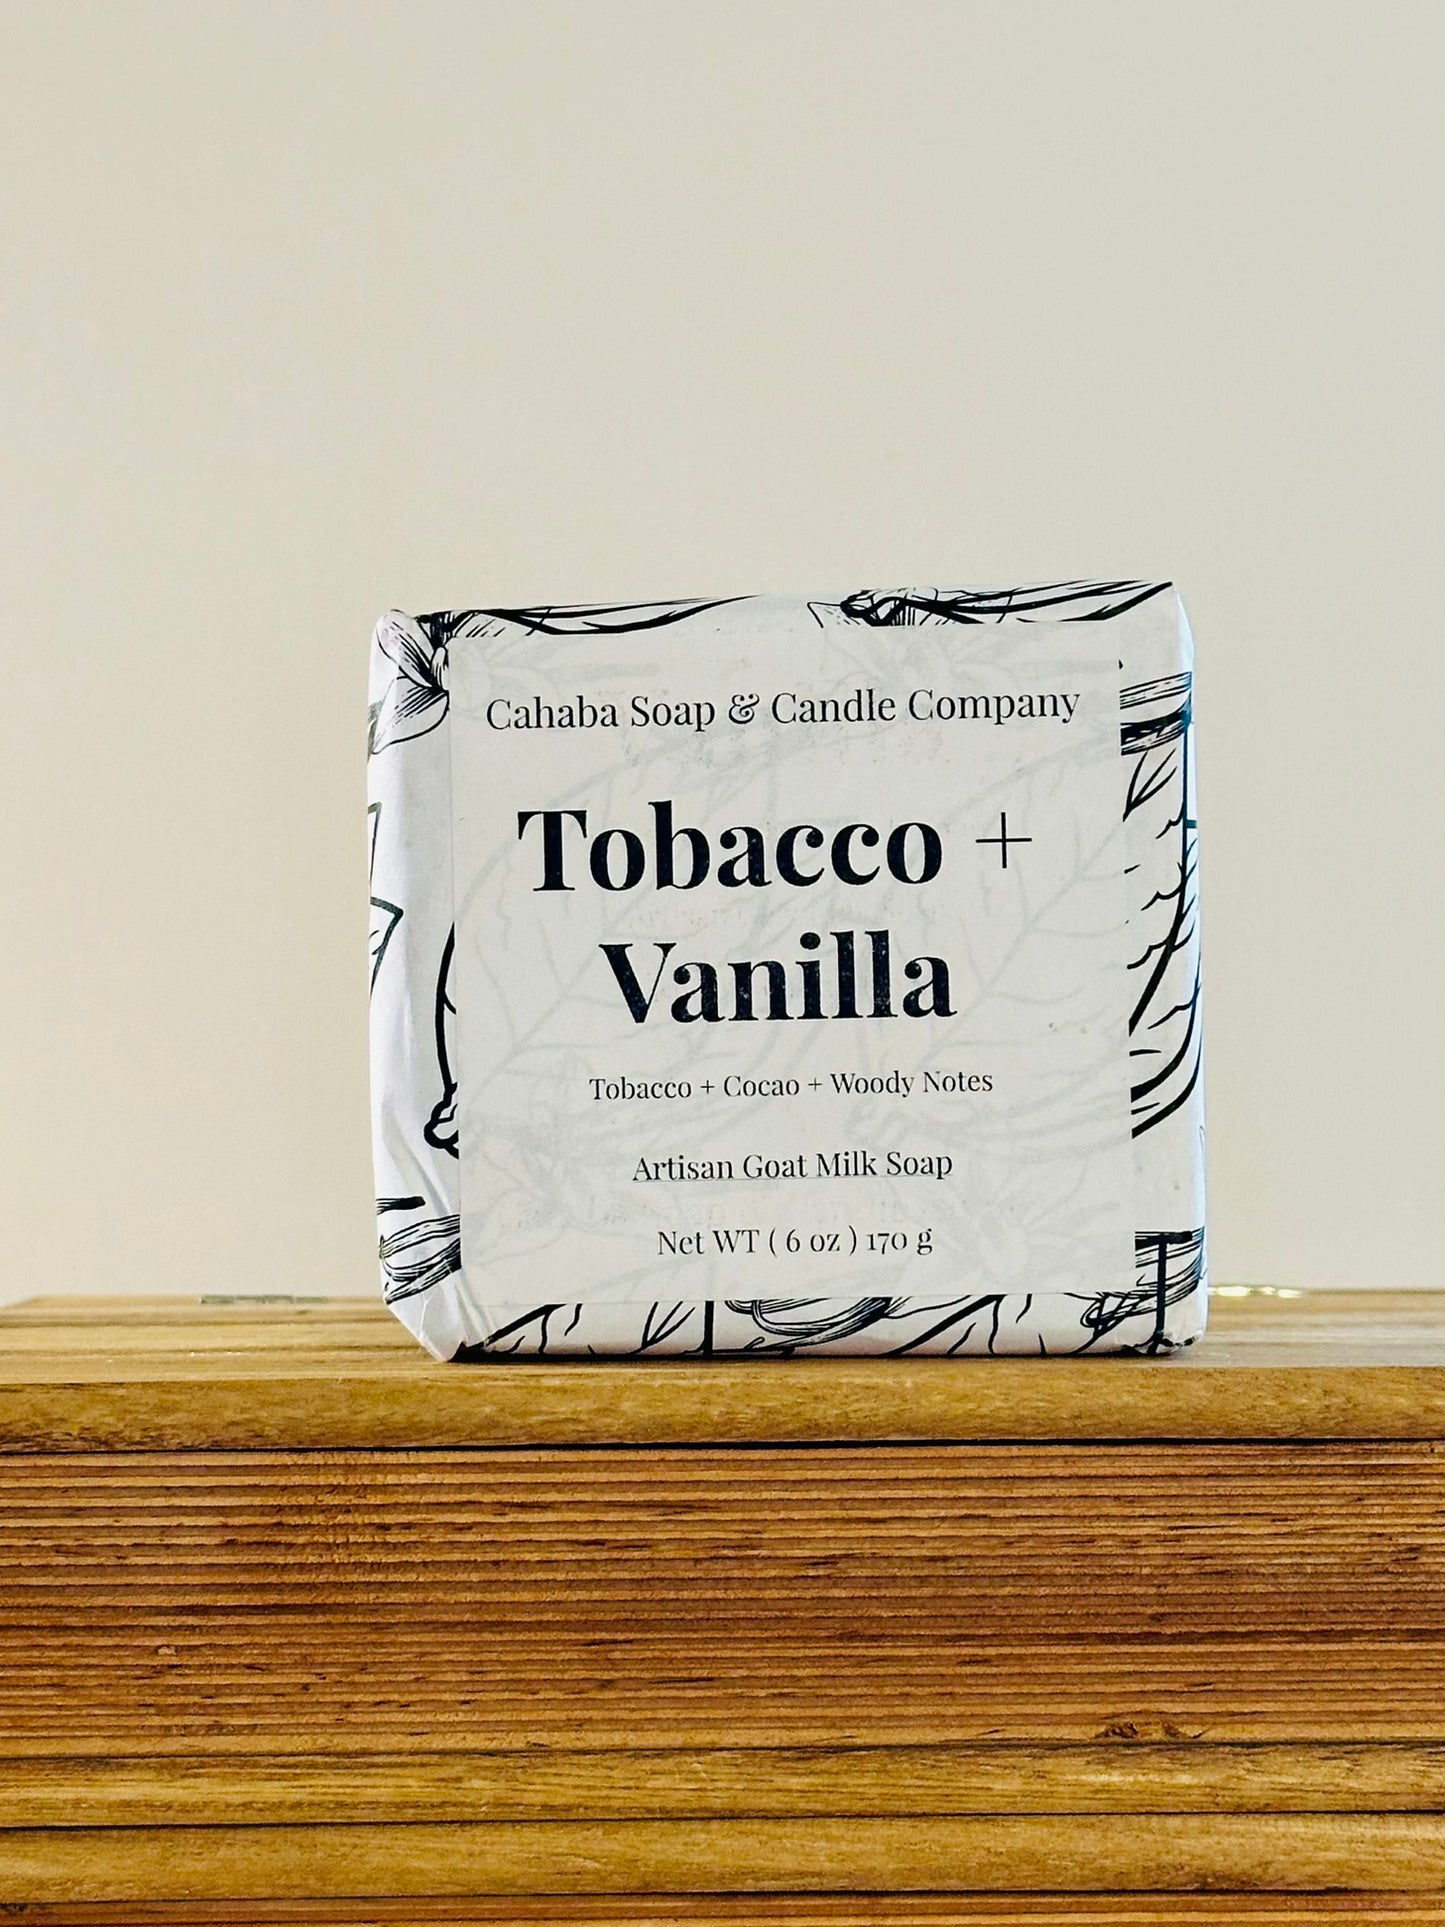 Tobacco + Vanilla - Cahaba Soap and Candle Company